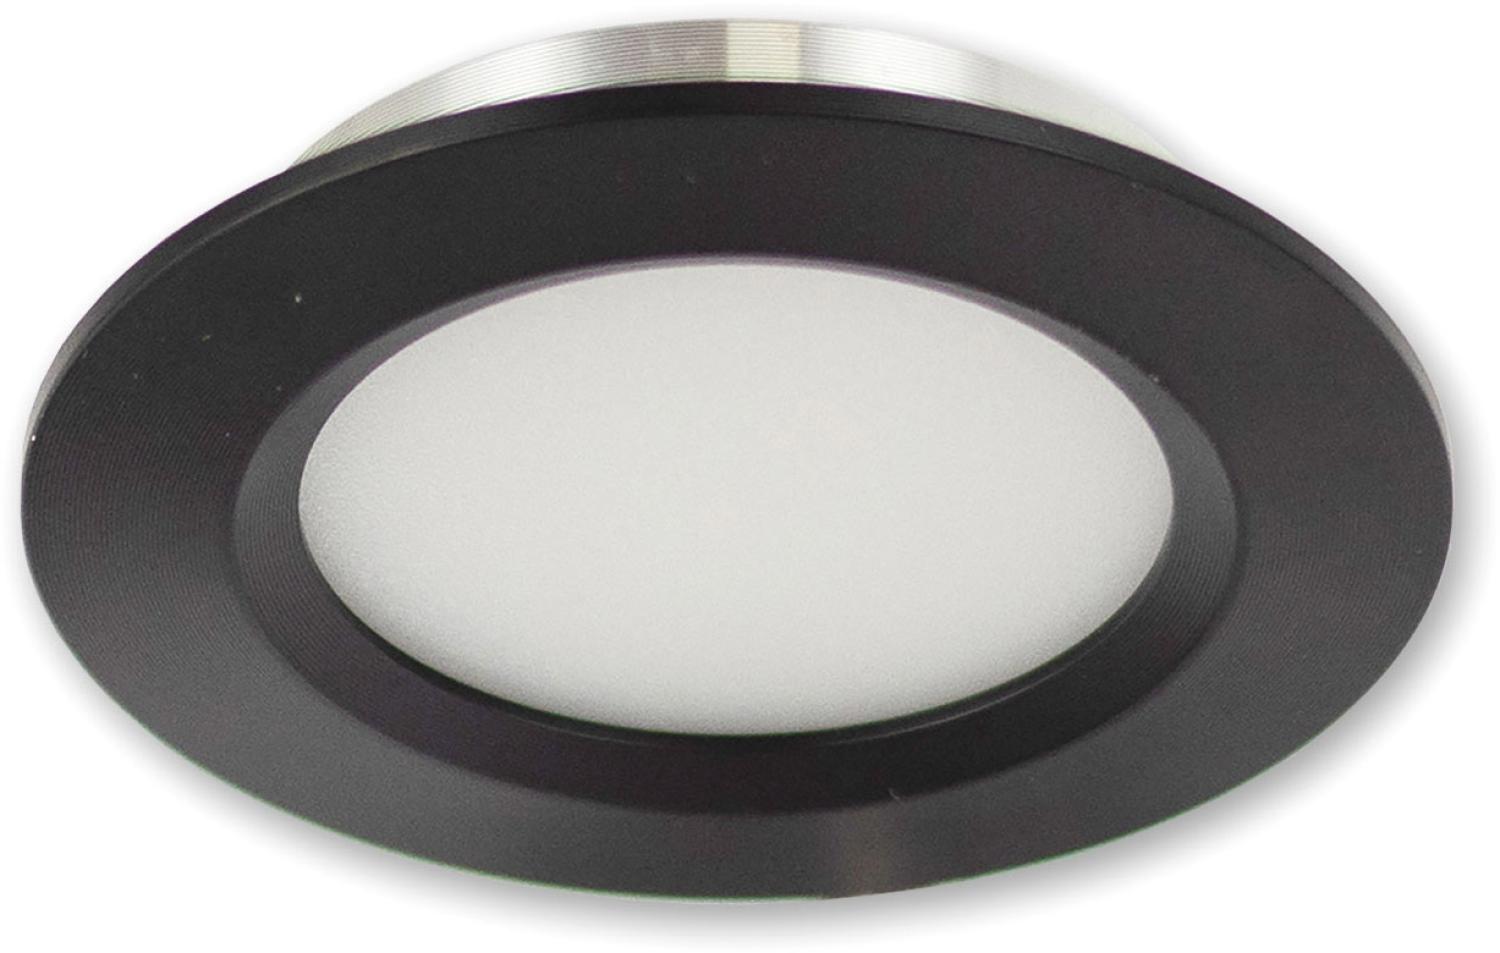 ISOLED LED Möbeleinbaustrahler Mini AMP schwarz, rund, 3W, 120°, 12V DC, warmweiß 3000K, dimmbar Bild 1